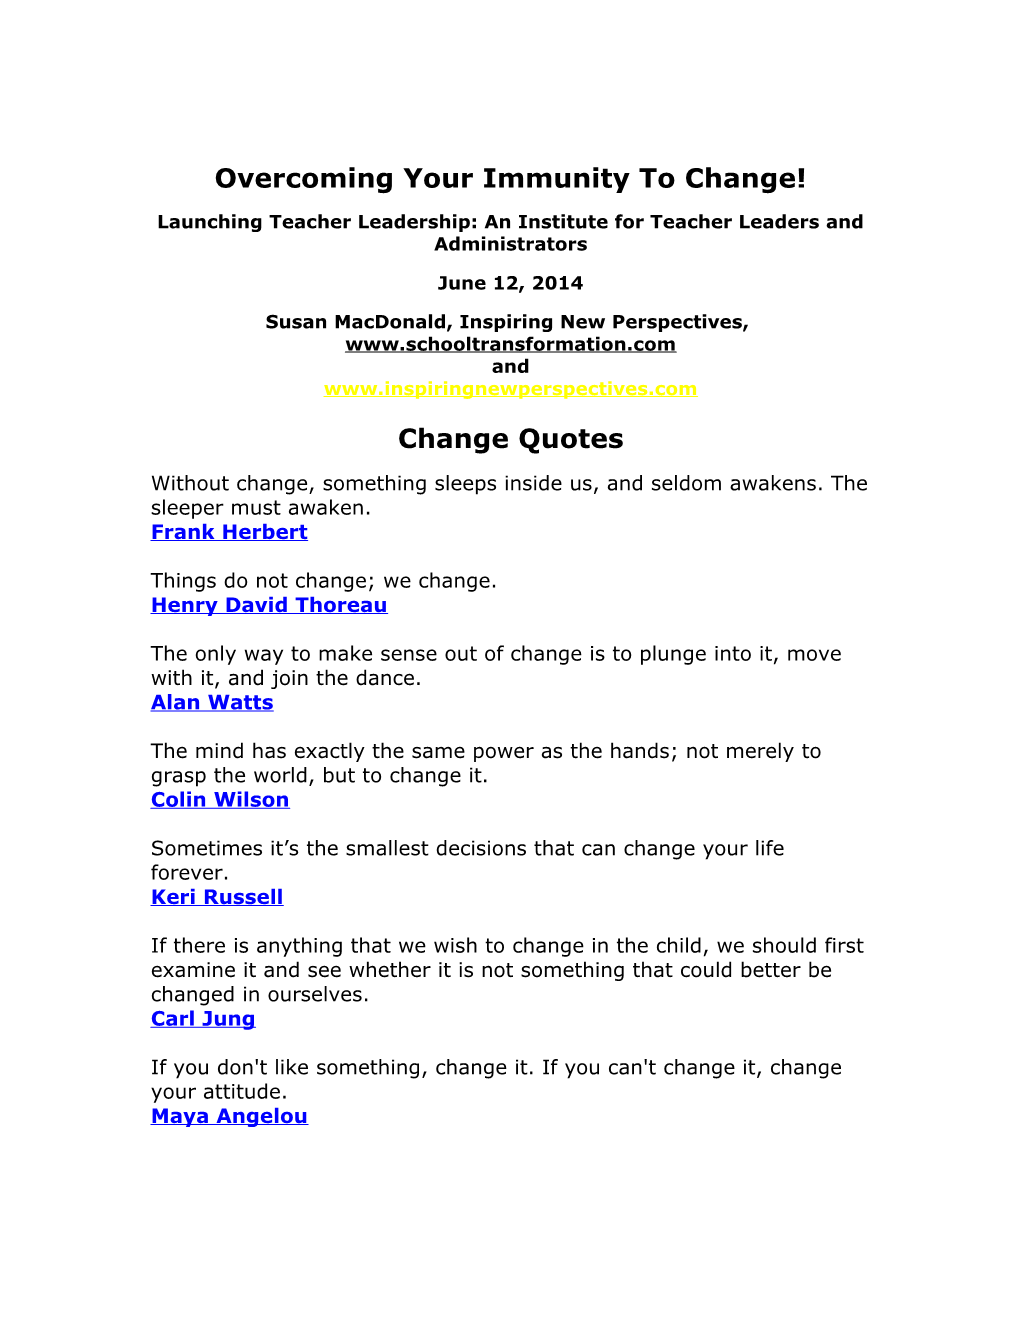 Overcoming Your Immunity to Change!